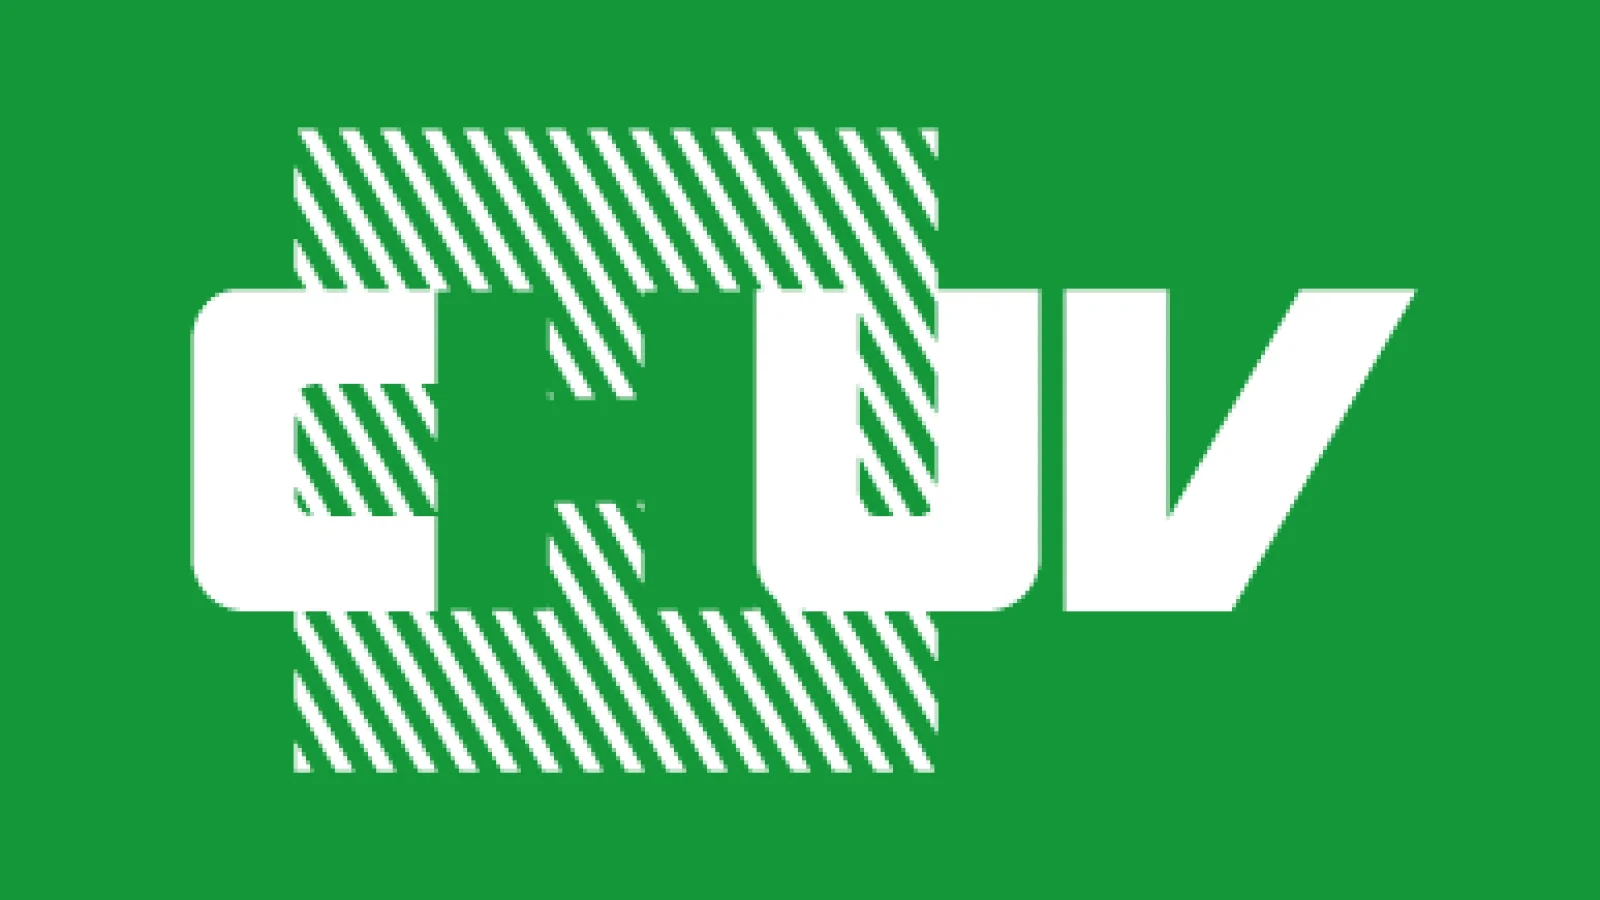 Logo CHUV